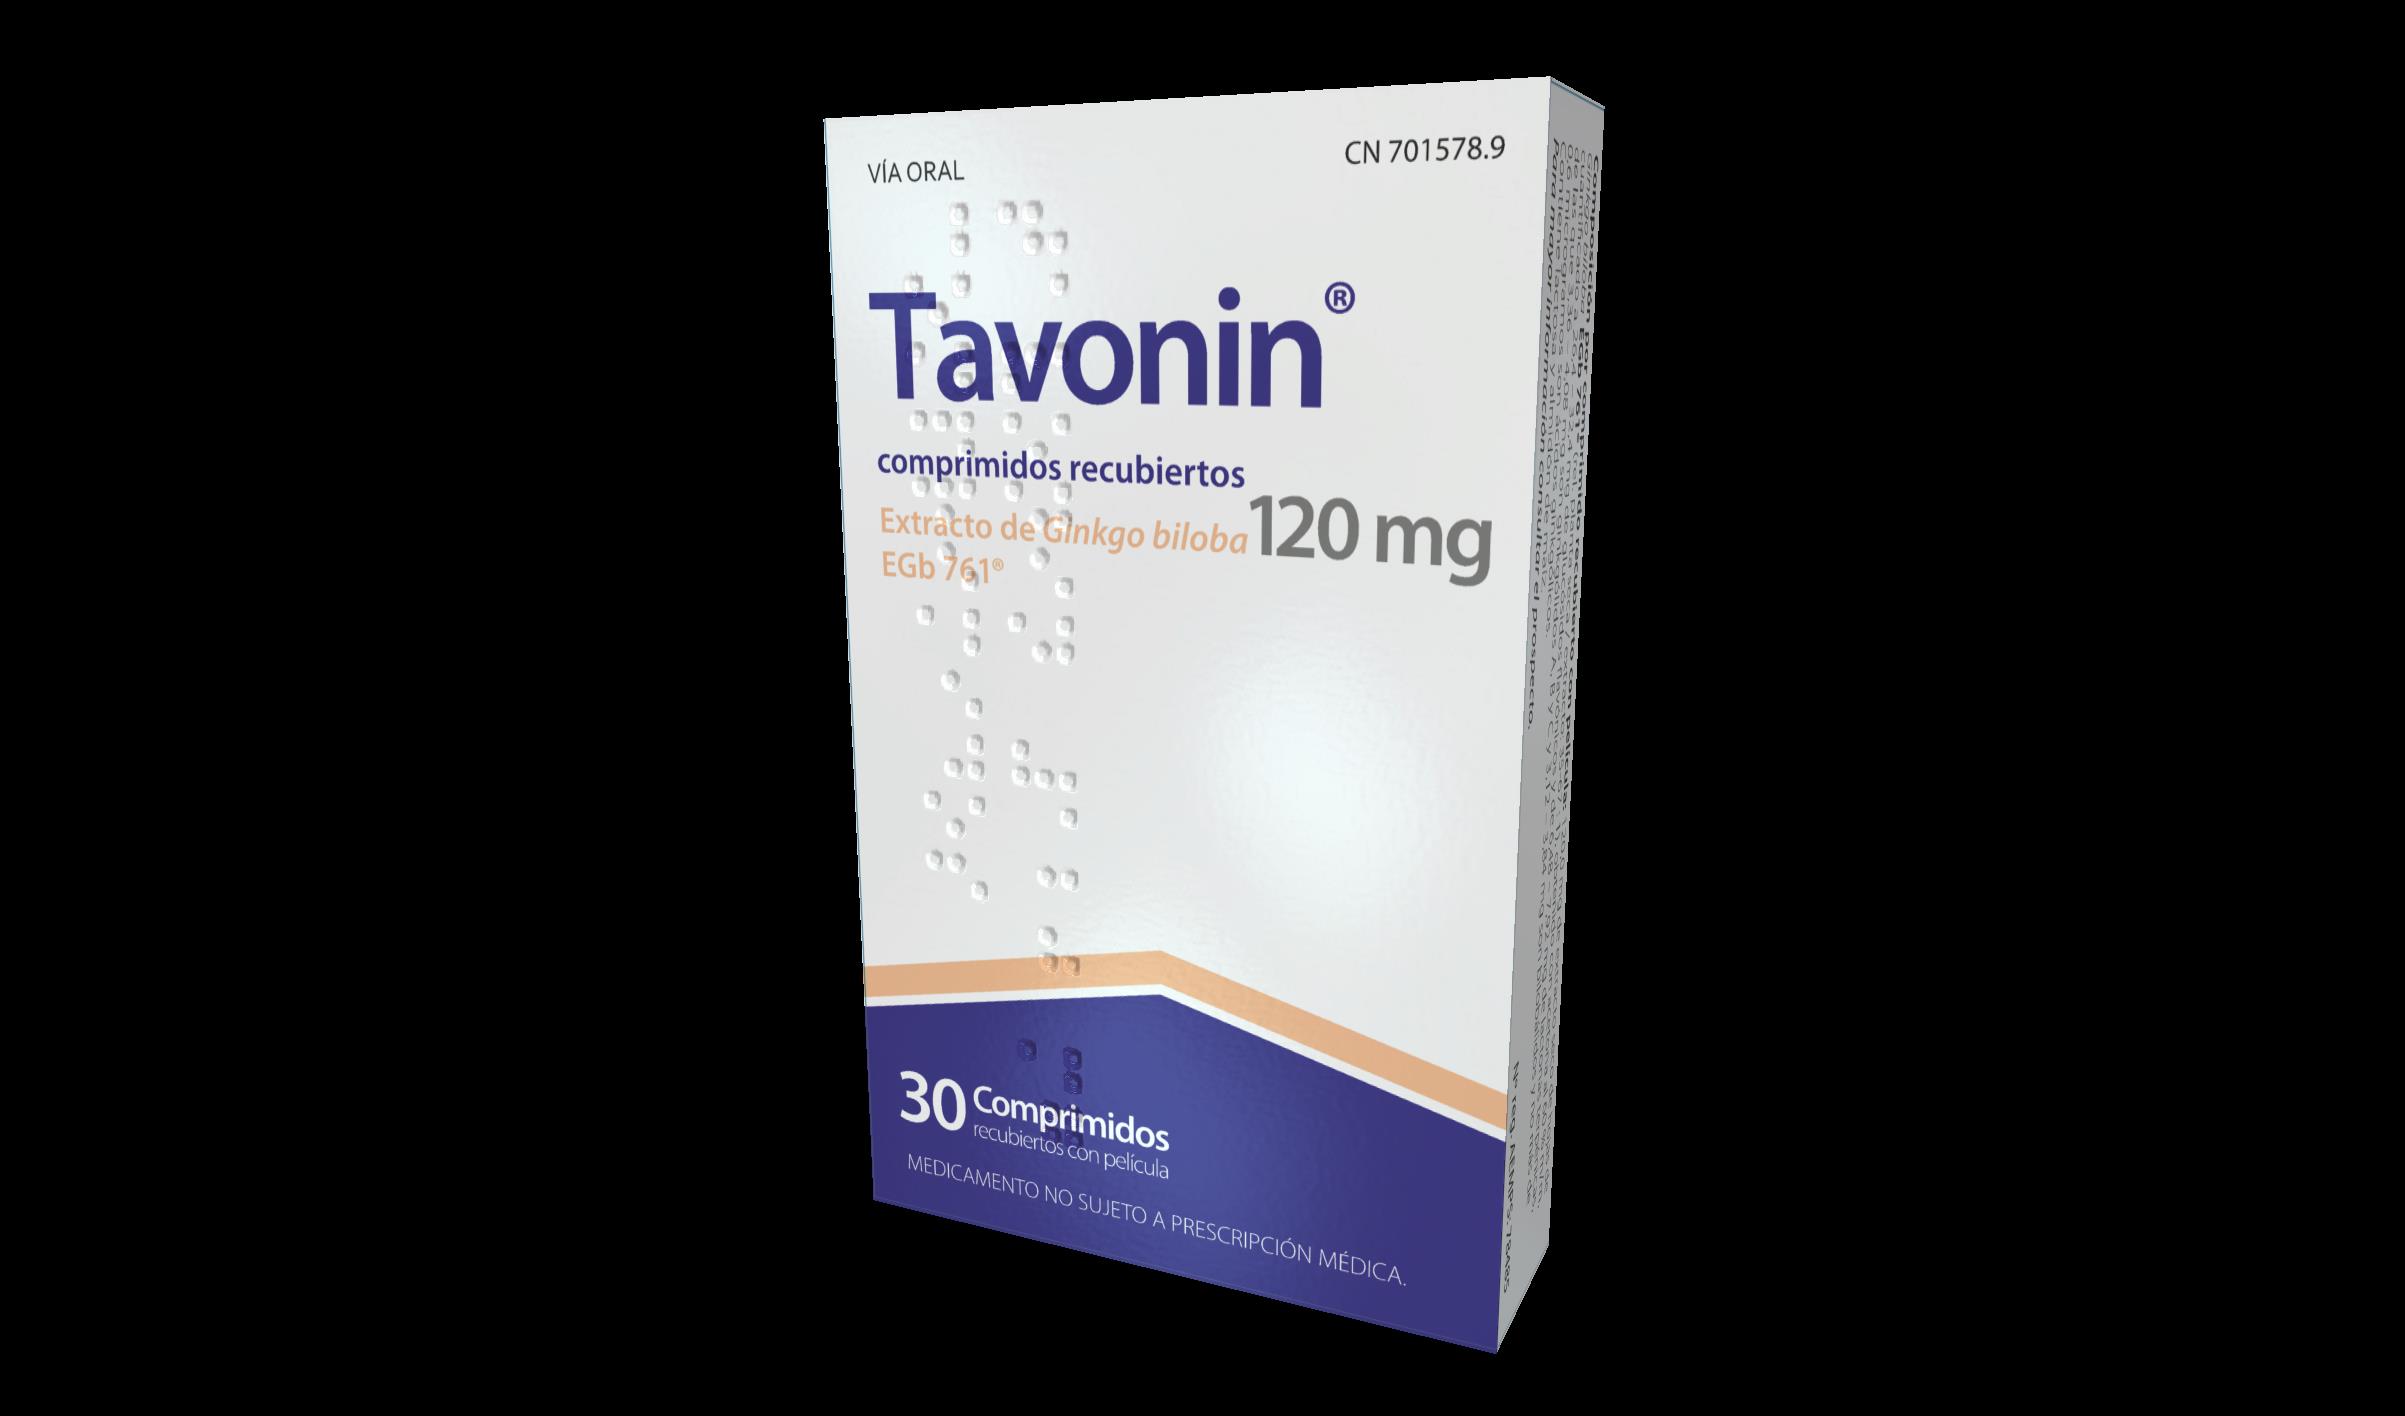 TAVONIN 120 MG COMPRIMIDOS, 30 comprimidos